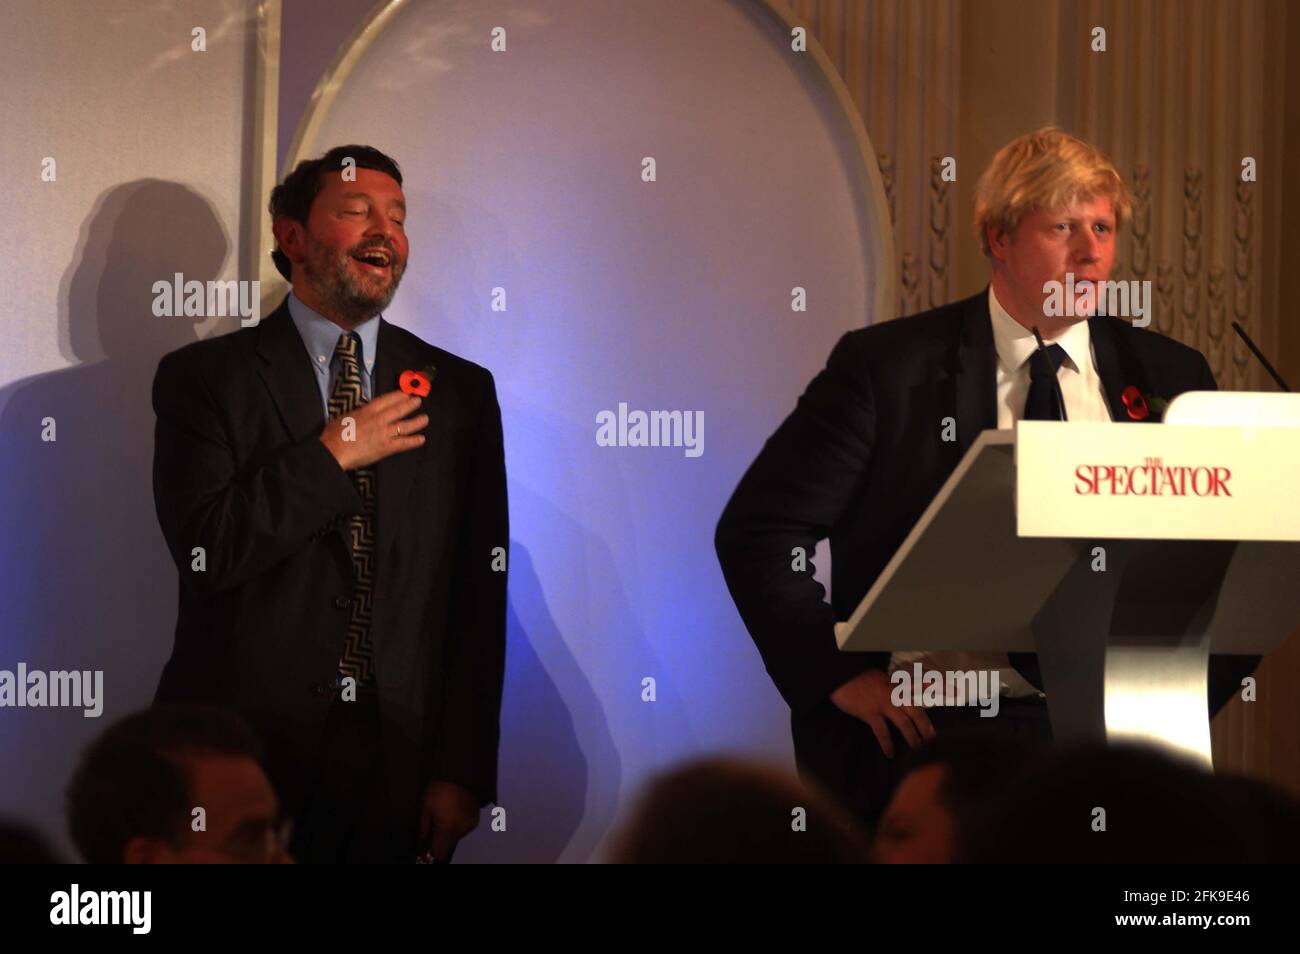 BLUNKETT AND BORIS JOHNSON AT THE PARLIAMENTARIAN OF THE YEAR AWARDS  IN LONDON. 8/11/01 PILSTON Stock Photo